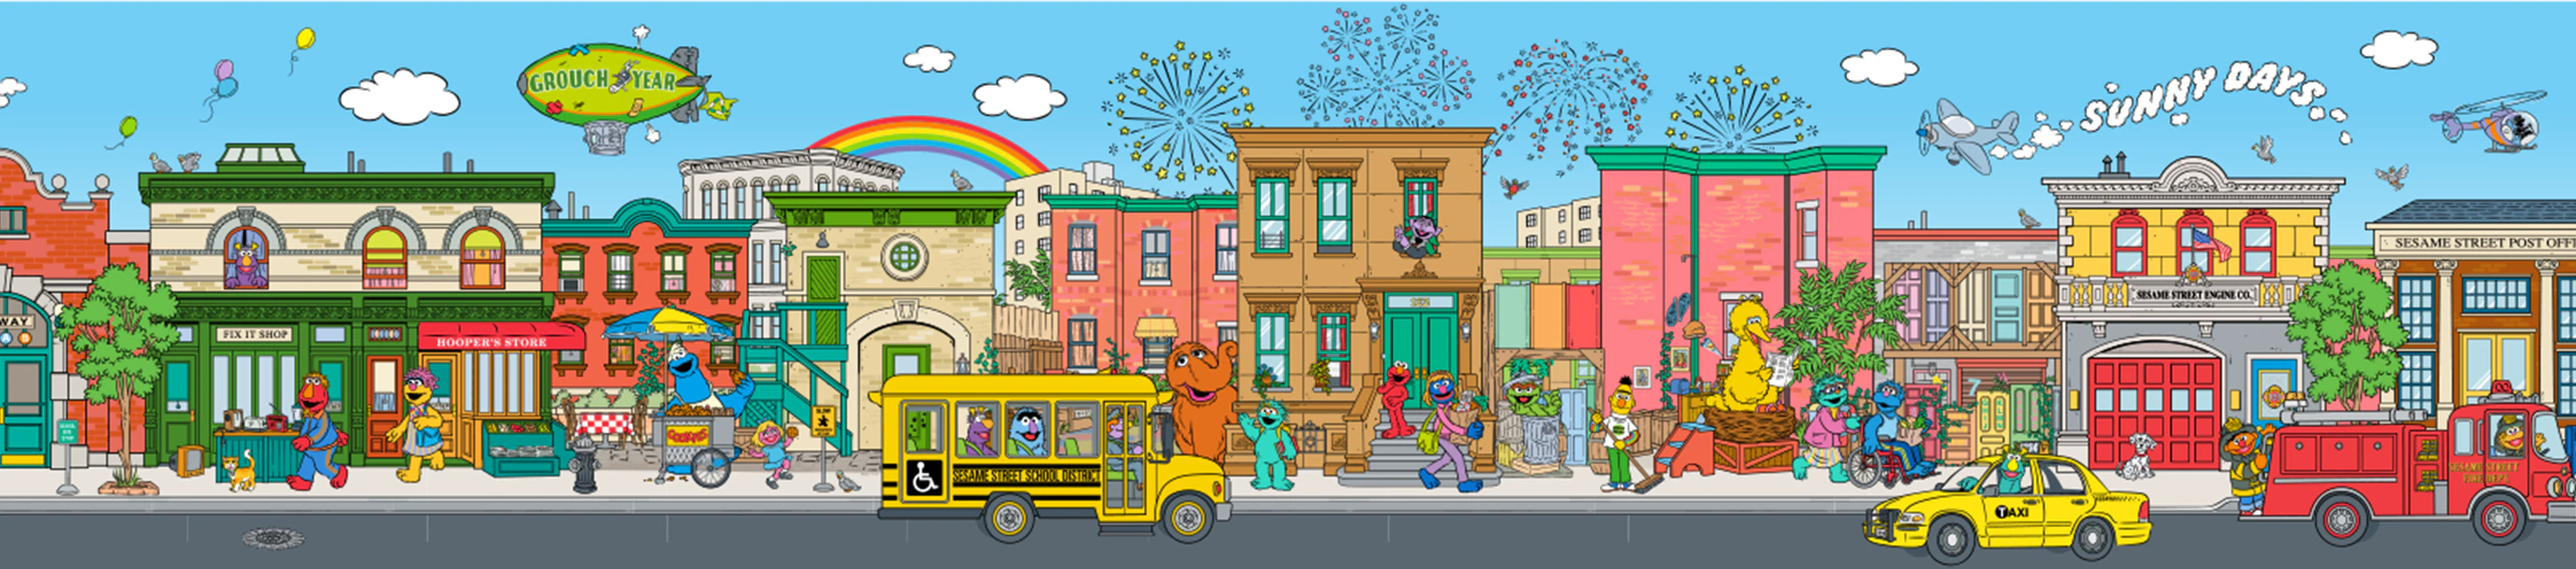 Sesame Street illutrative background